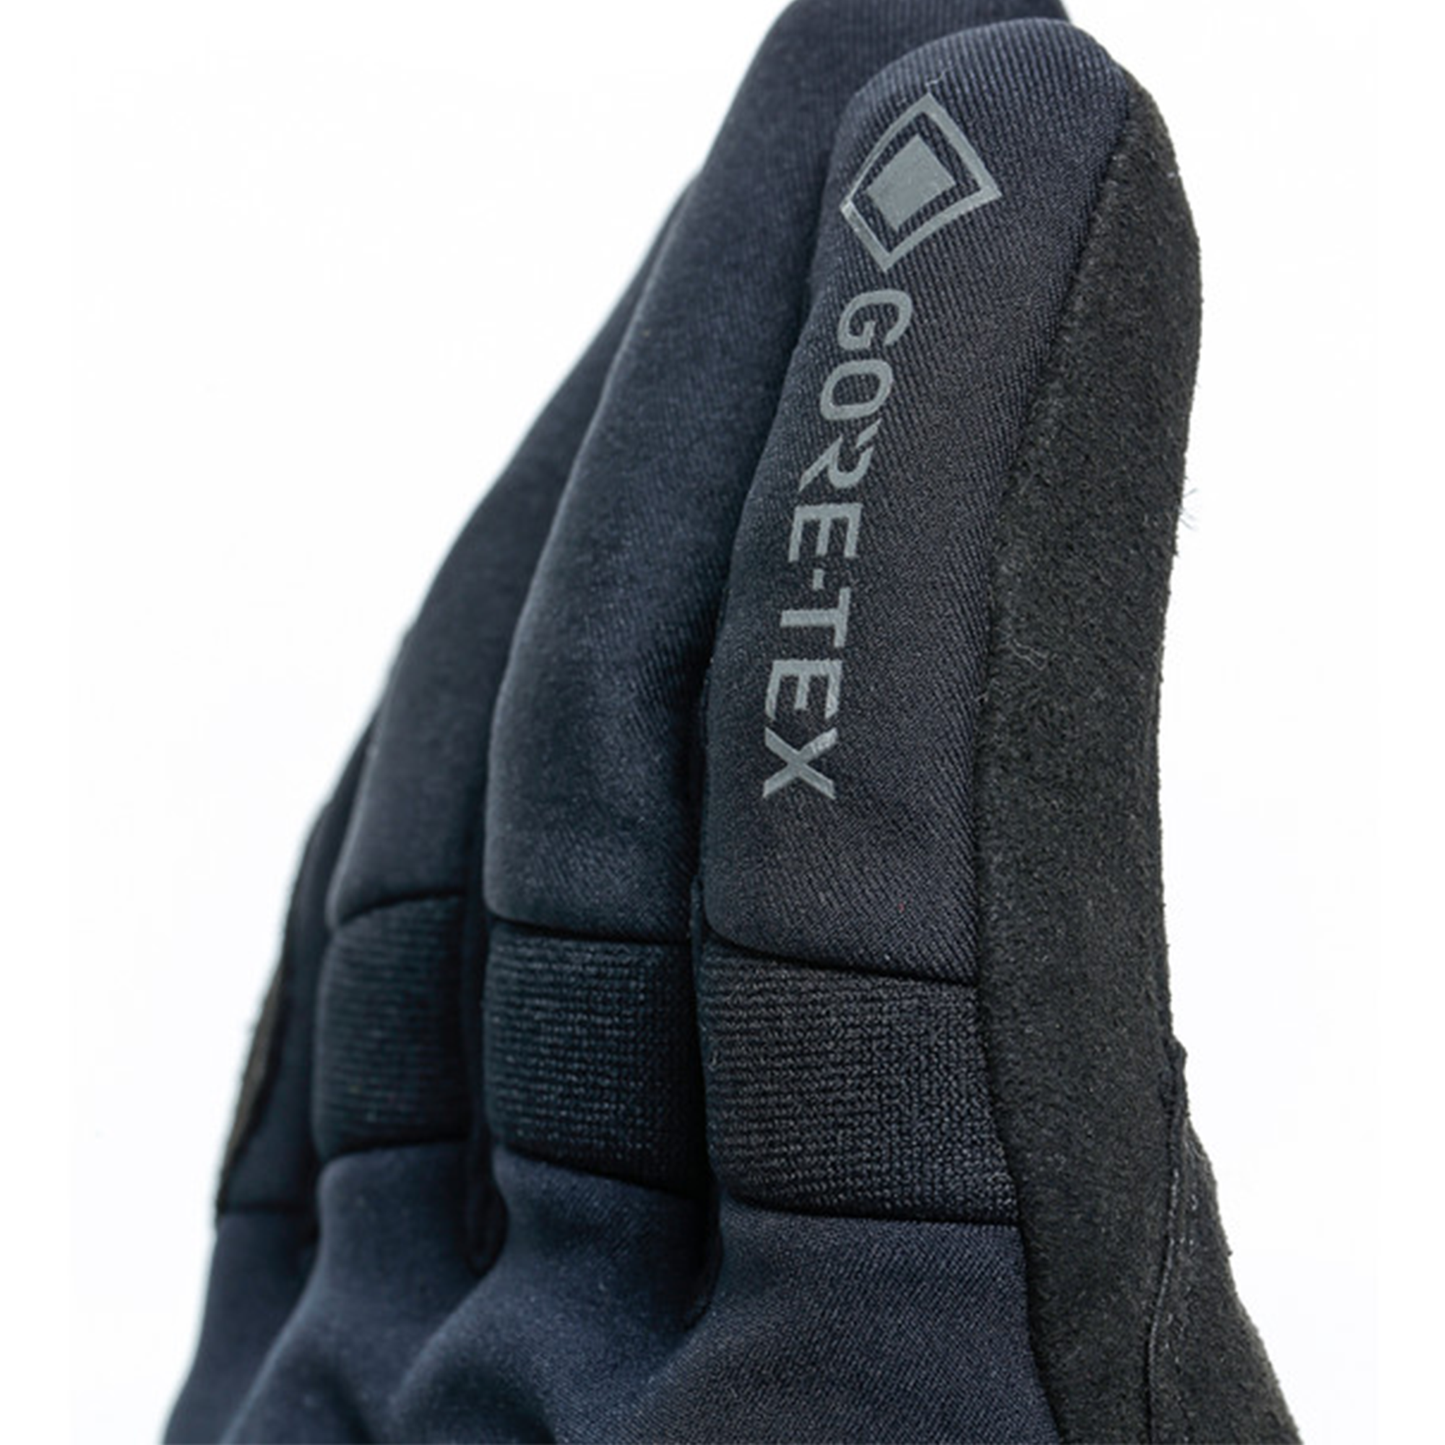 Dainese Nembo Goretex Gloves with Goregrip (631)